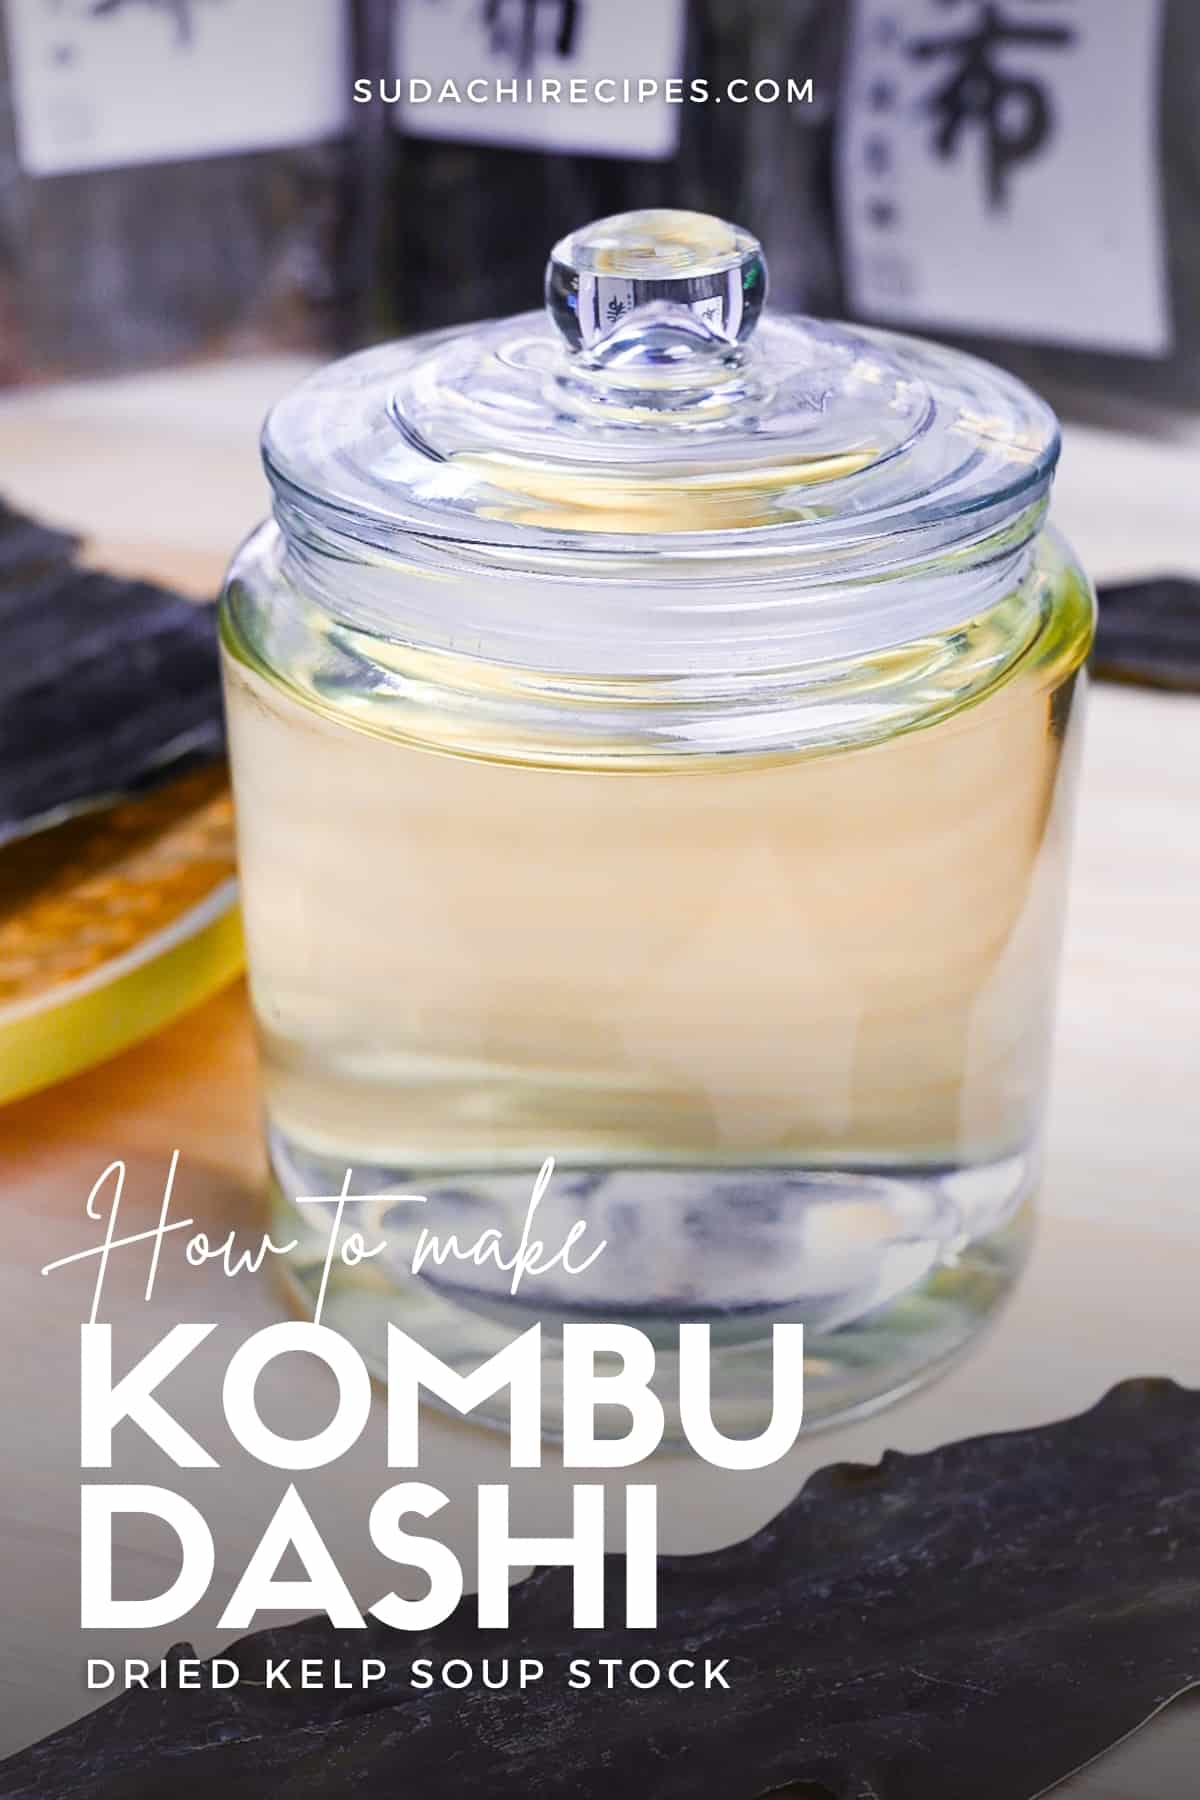 Kombu dashi in a sealed glass jar surrounded by kombu